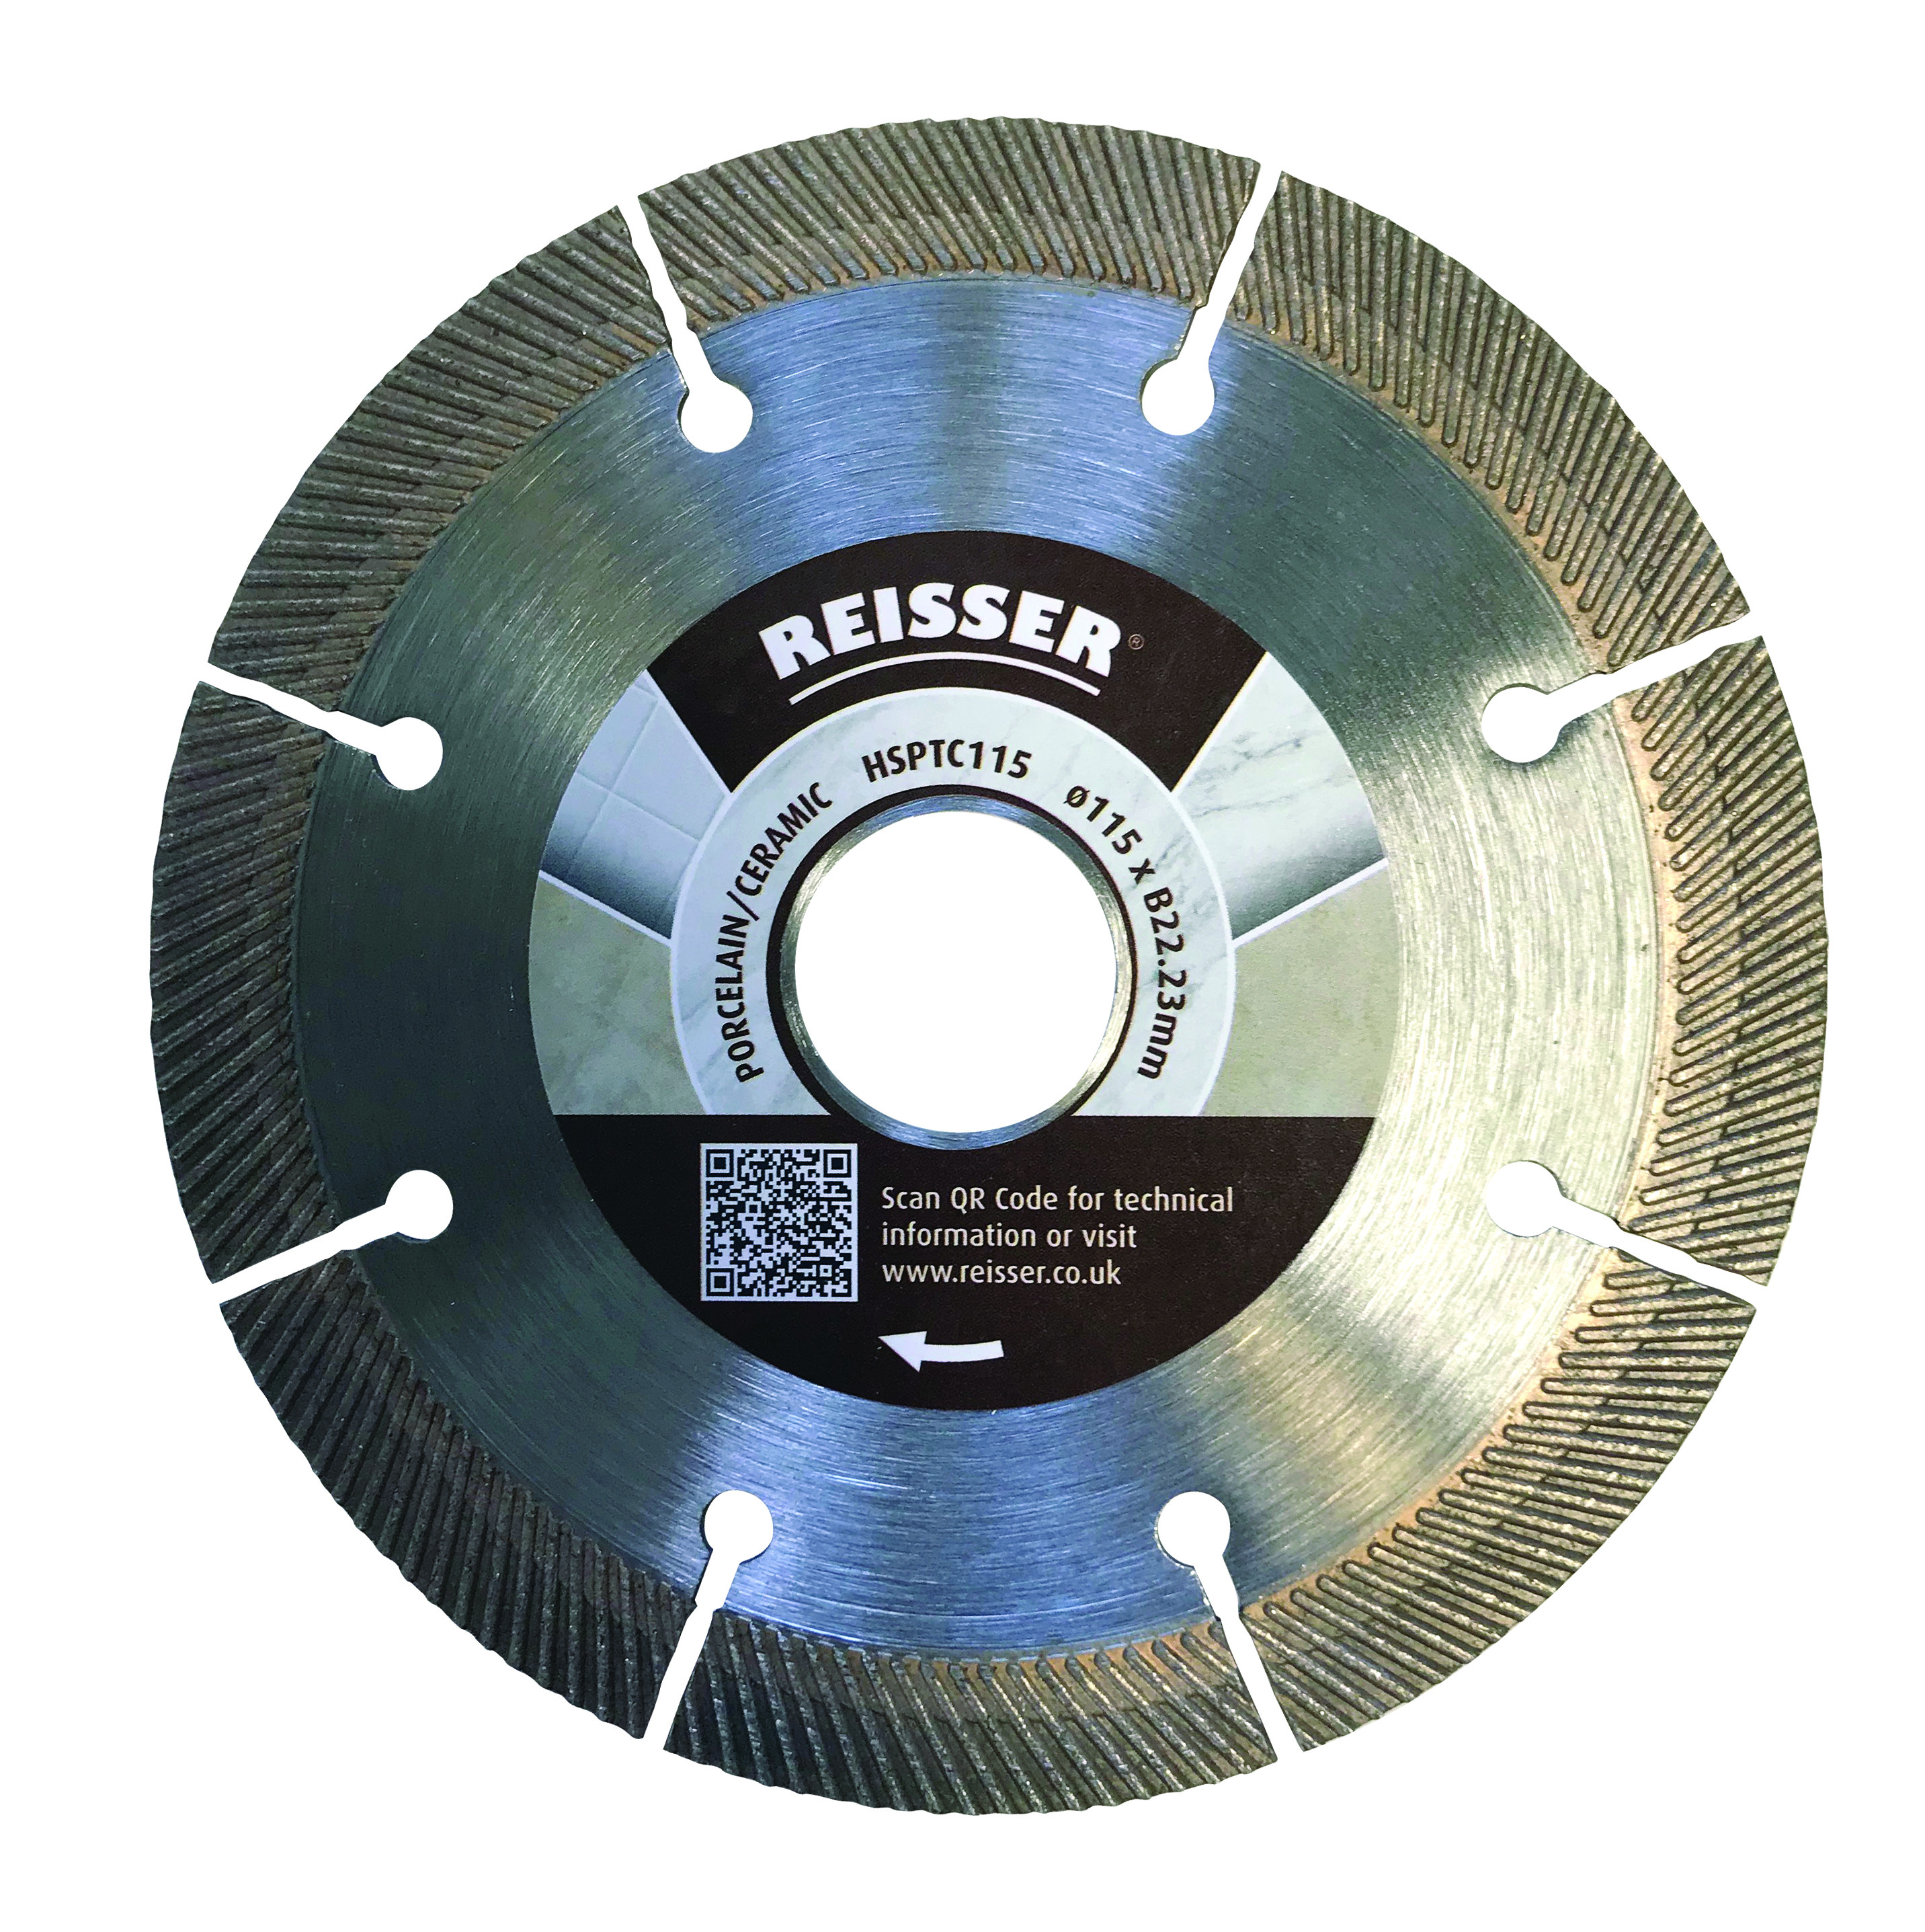 Reisser HSPTC125 Dry Porcelain Tile Cutting Blade 125 X 22.23Mm